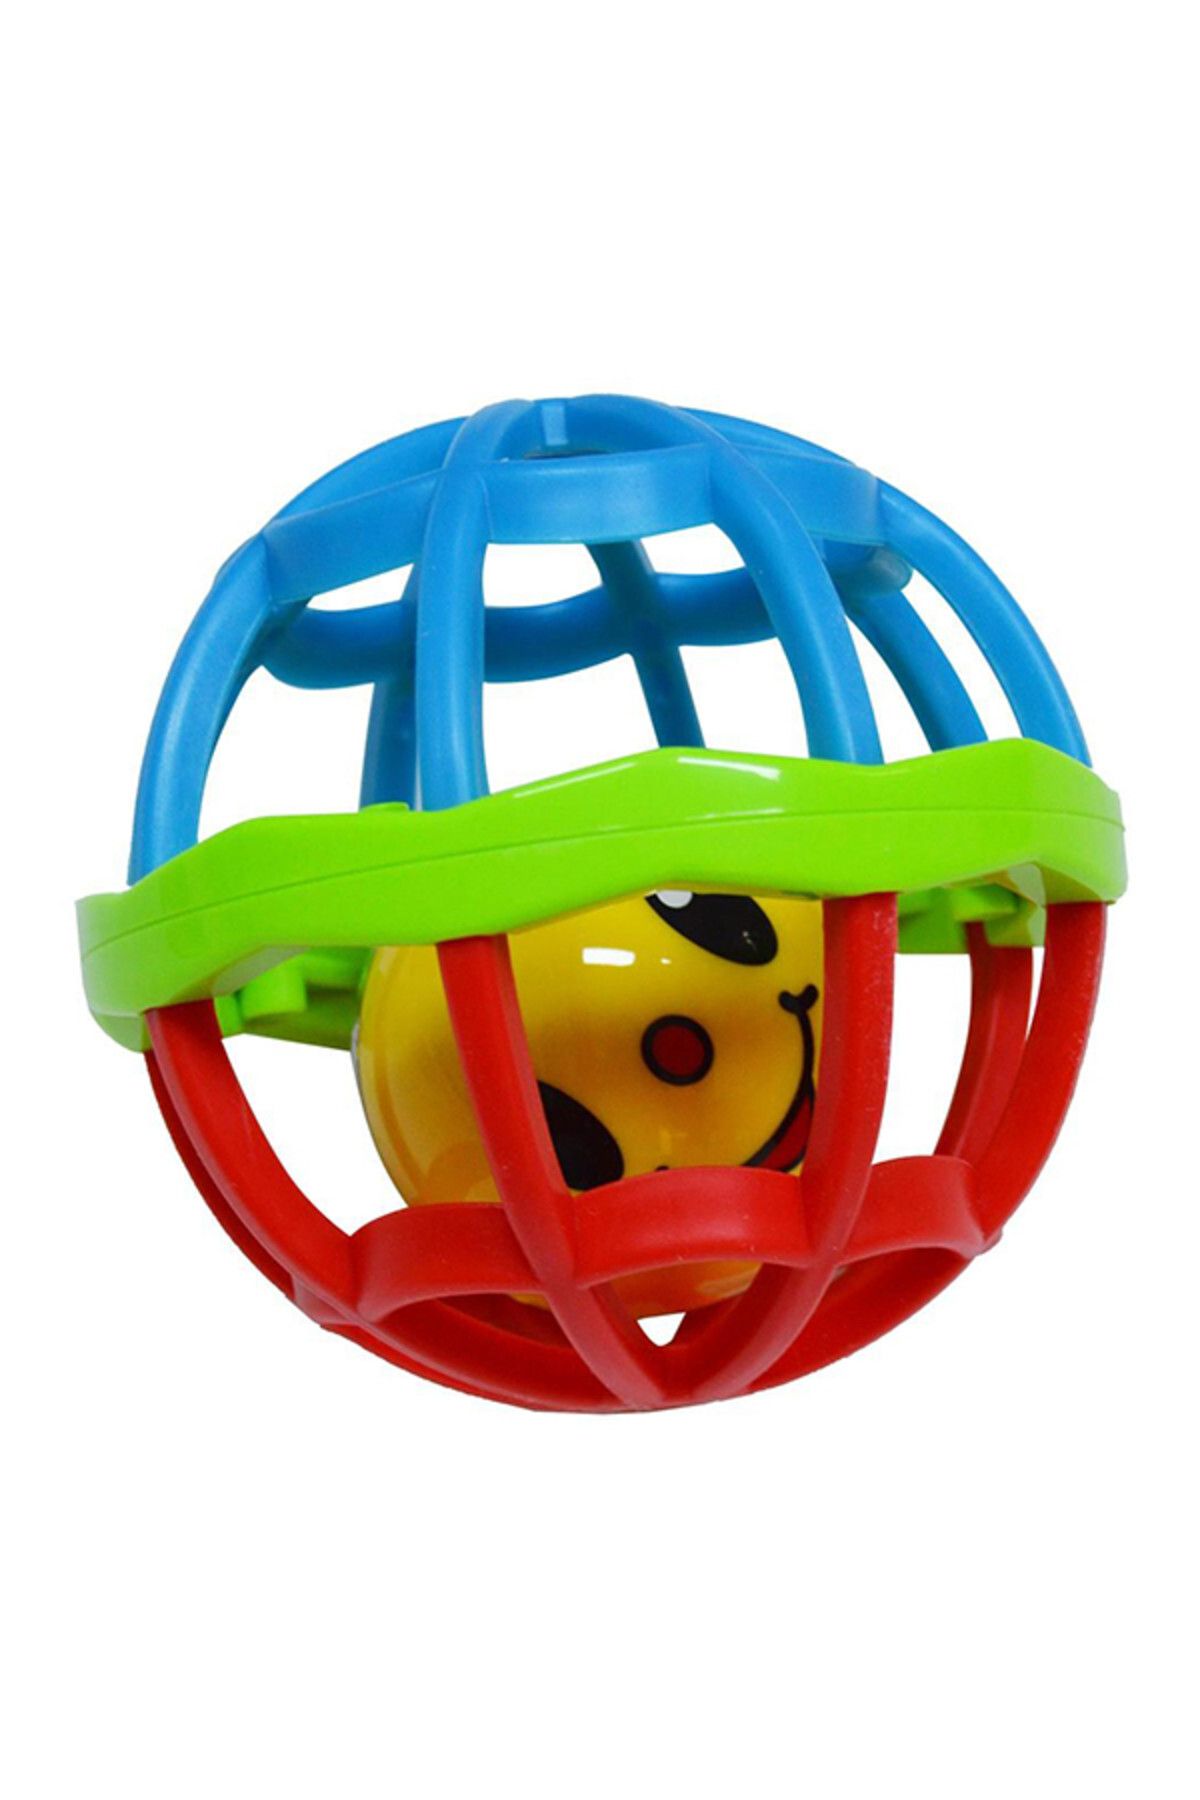 Prego Prego Toys 0081 Rubber Fitness Ball /